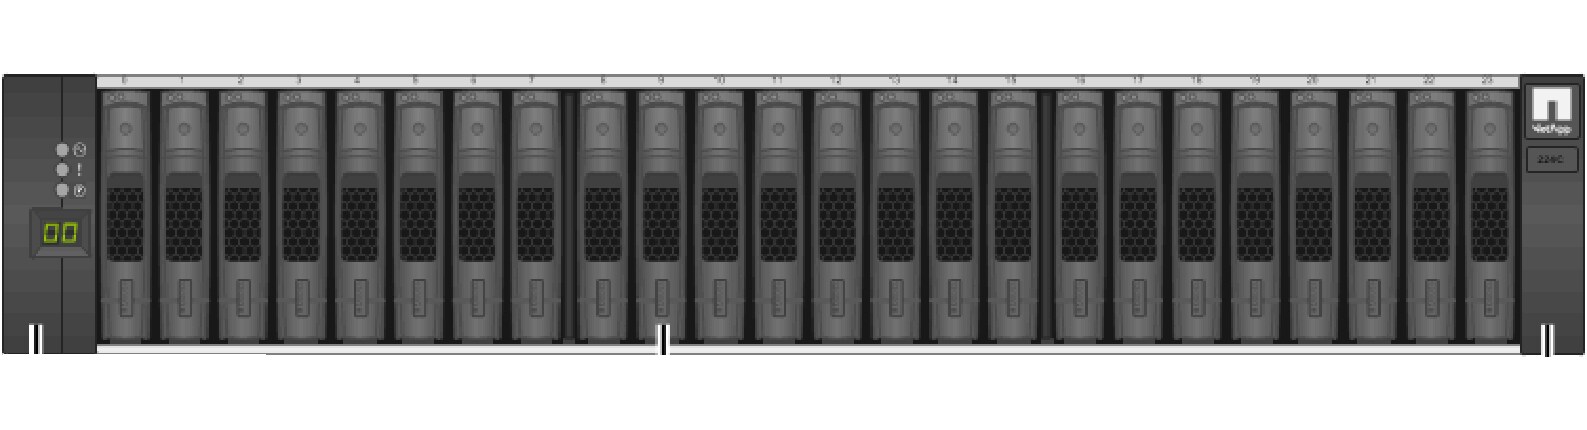 NetApp StorageShelf DE224C - hard drive array